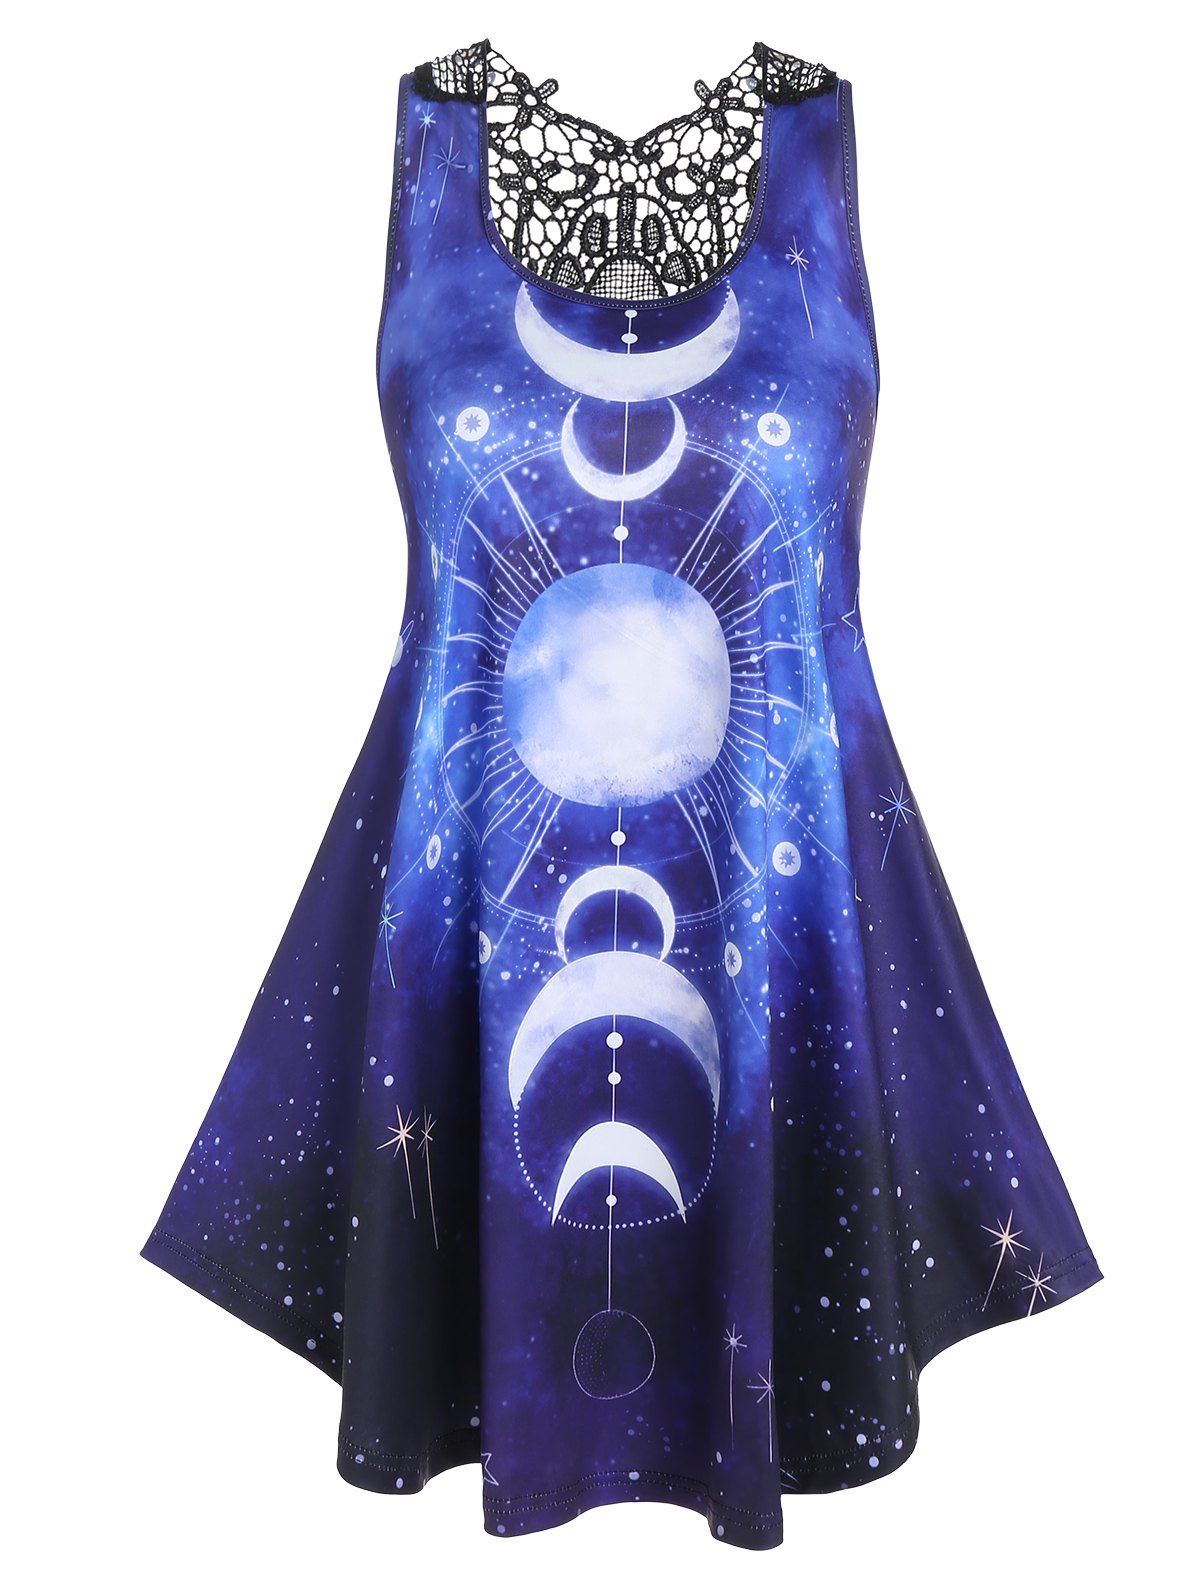 Casual Tank Top Sun Moon Galaxy Print Tank Top Lace Hollow Out Summer Top - DEEP BLUE XL